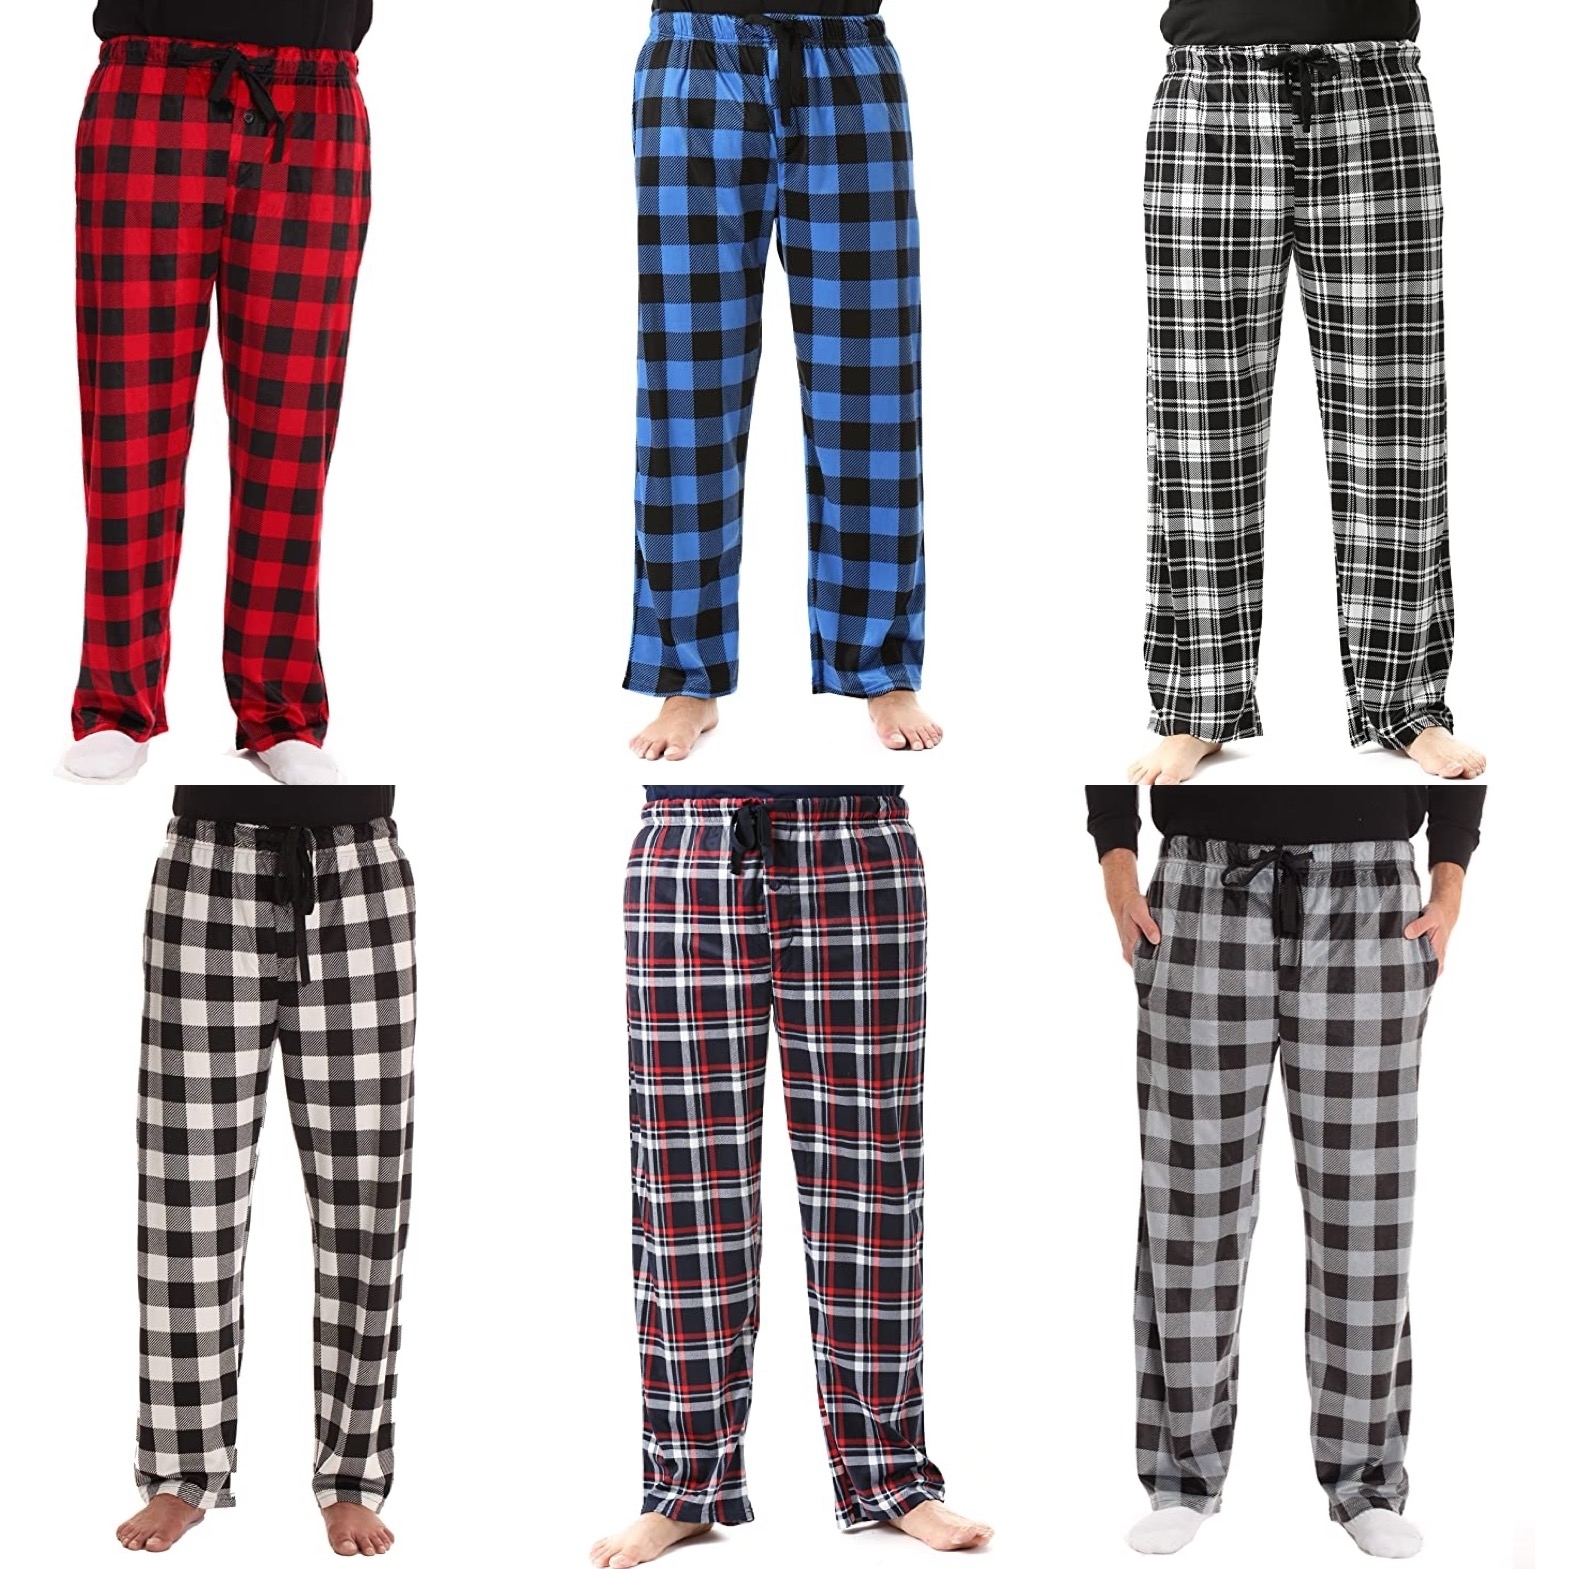 Multi-Pack: Men's Ultra Soft Flannel Plaid Pajama Lounge Pants - 3-Pack, Medium